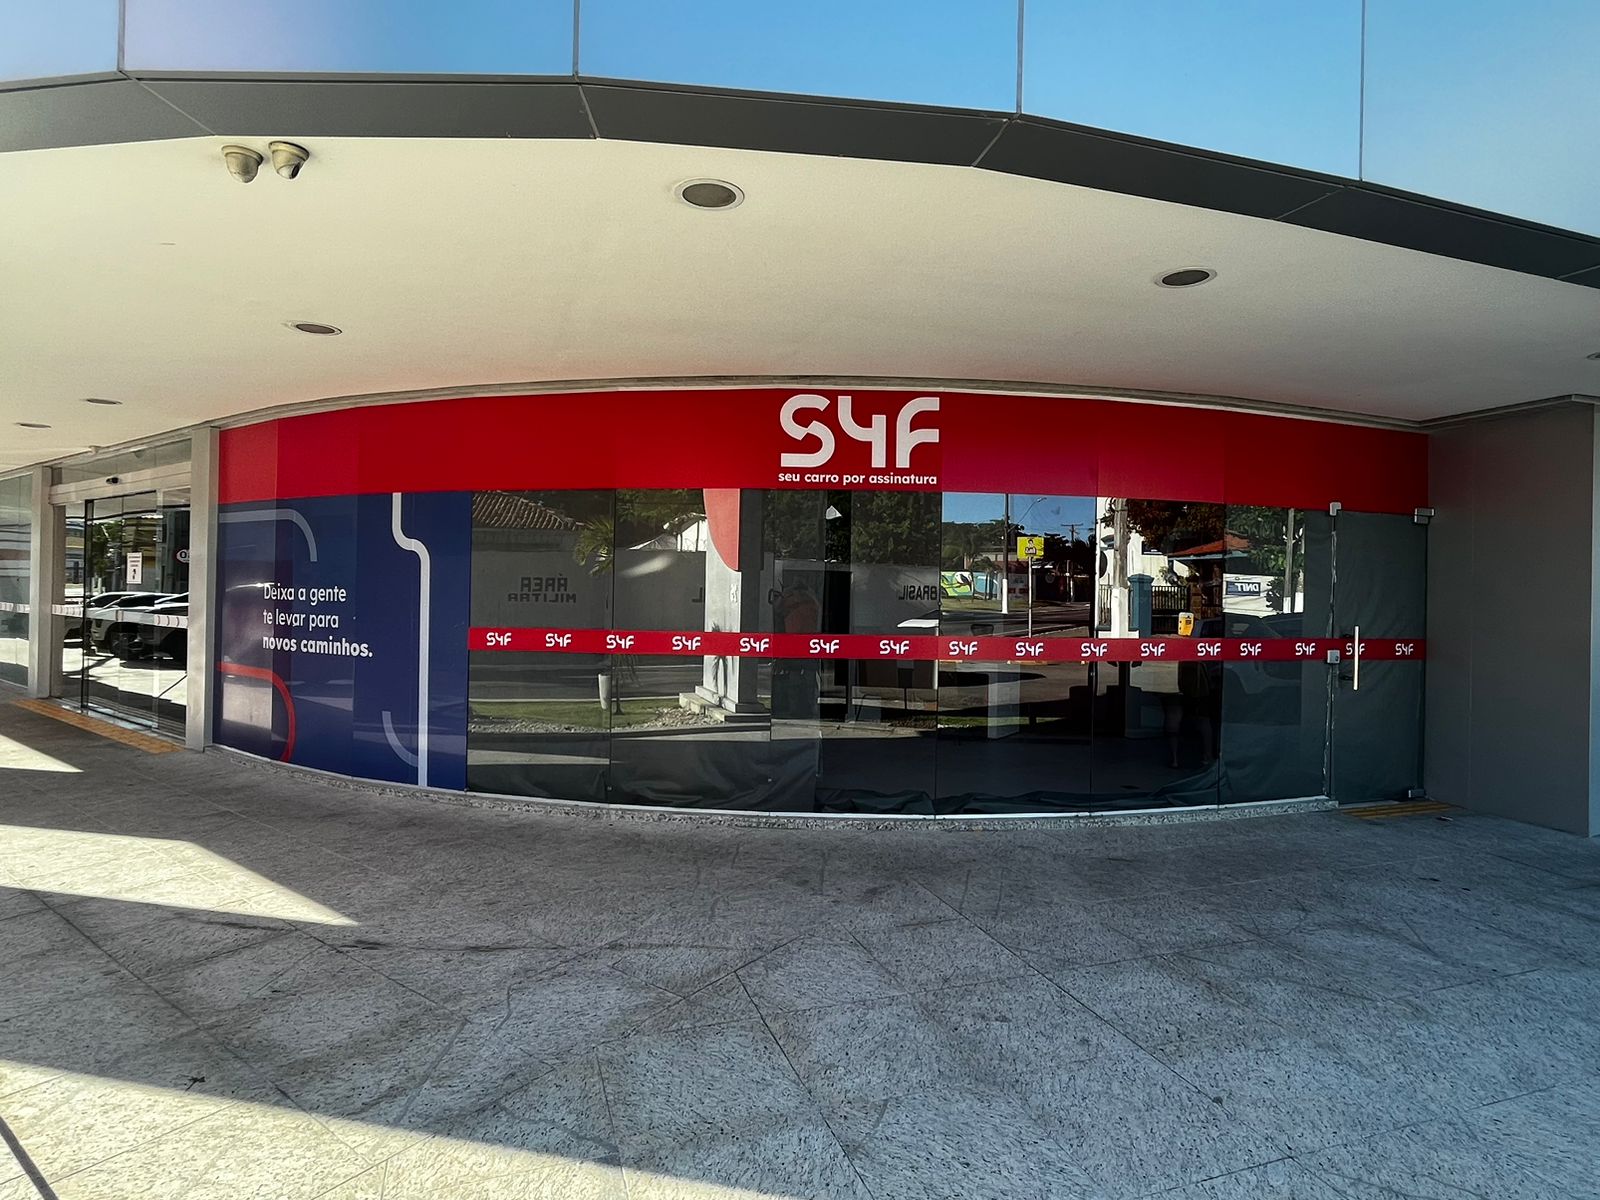 Lojas S4F – Santander